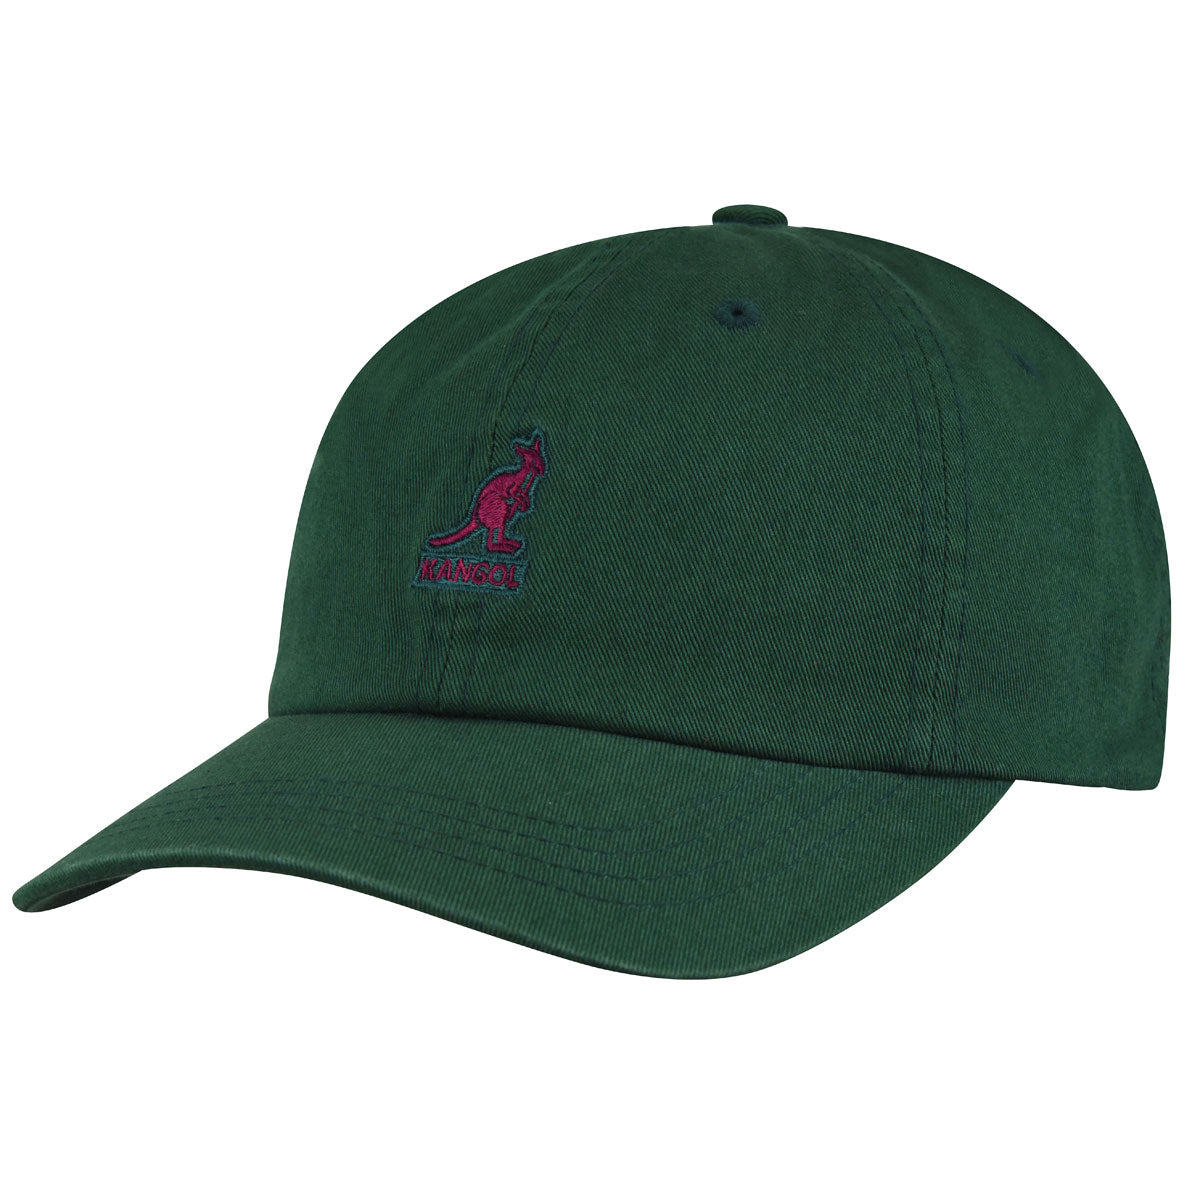 Green front logo hat